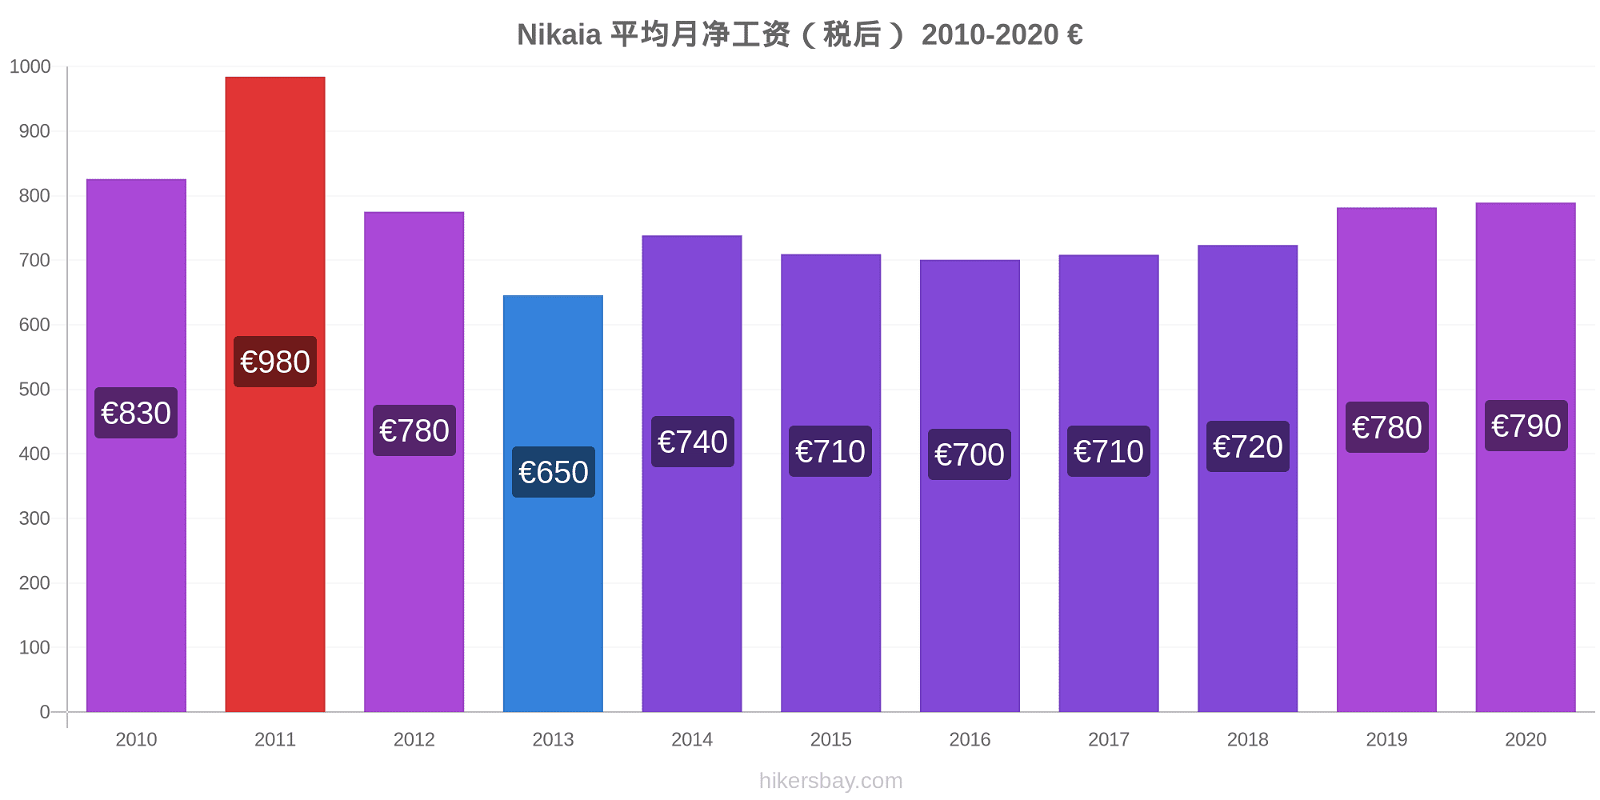 Nikaia 价格变化 平均每月净工资 （后税） hikersbay.com